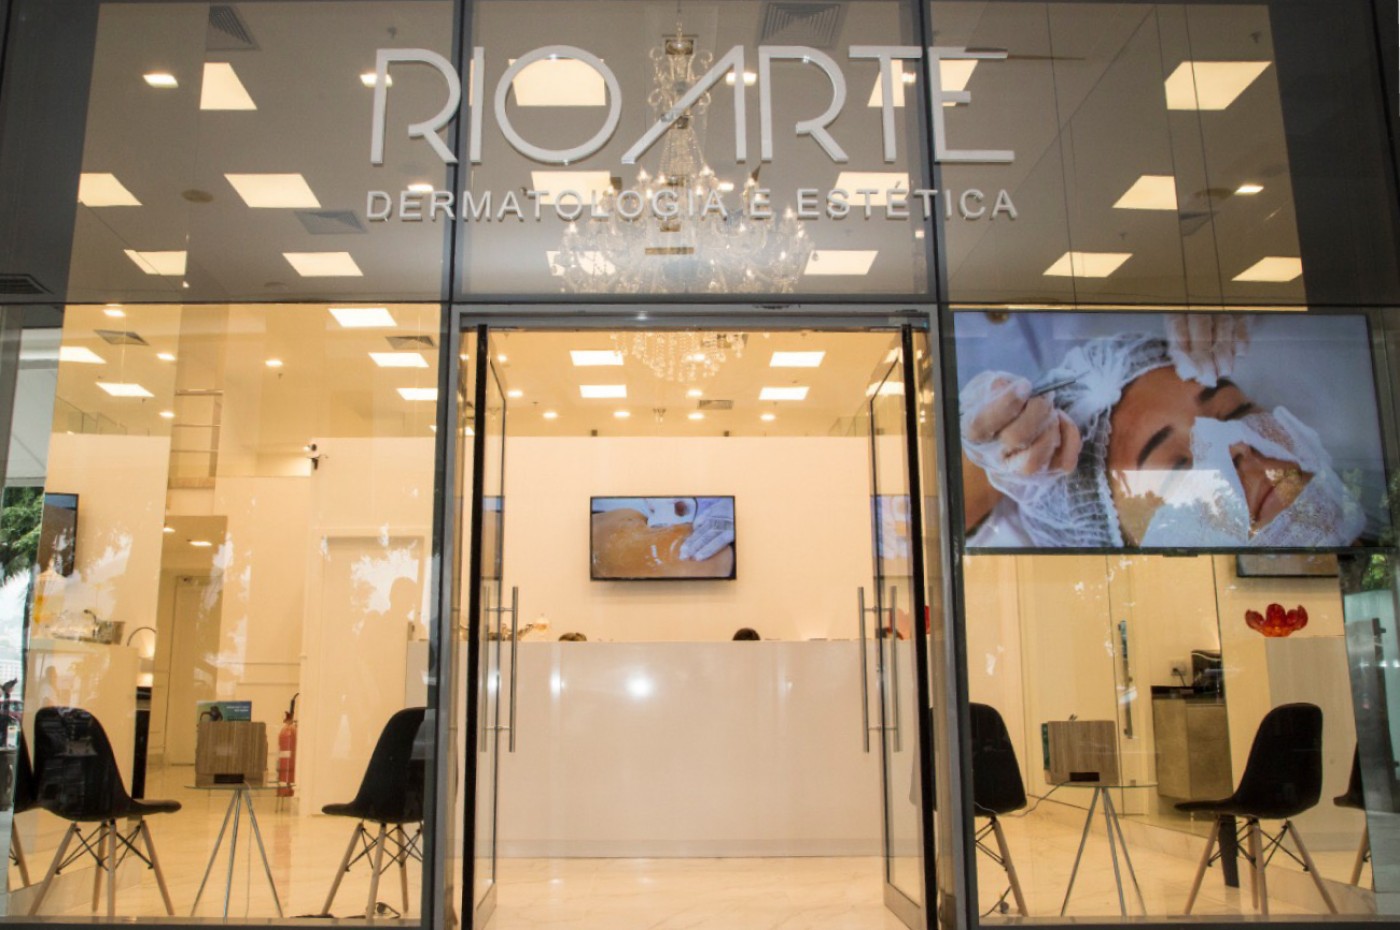 Rio Arte Dermatologia e Estética